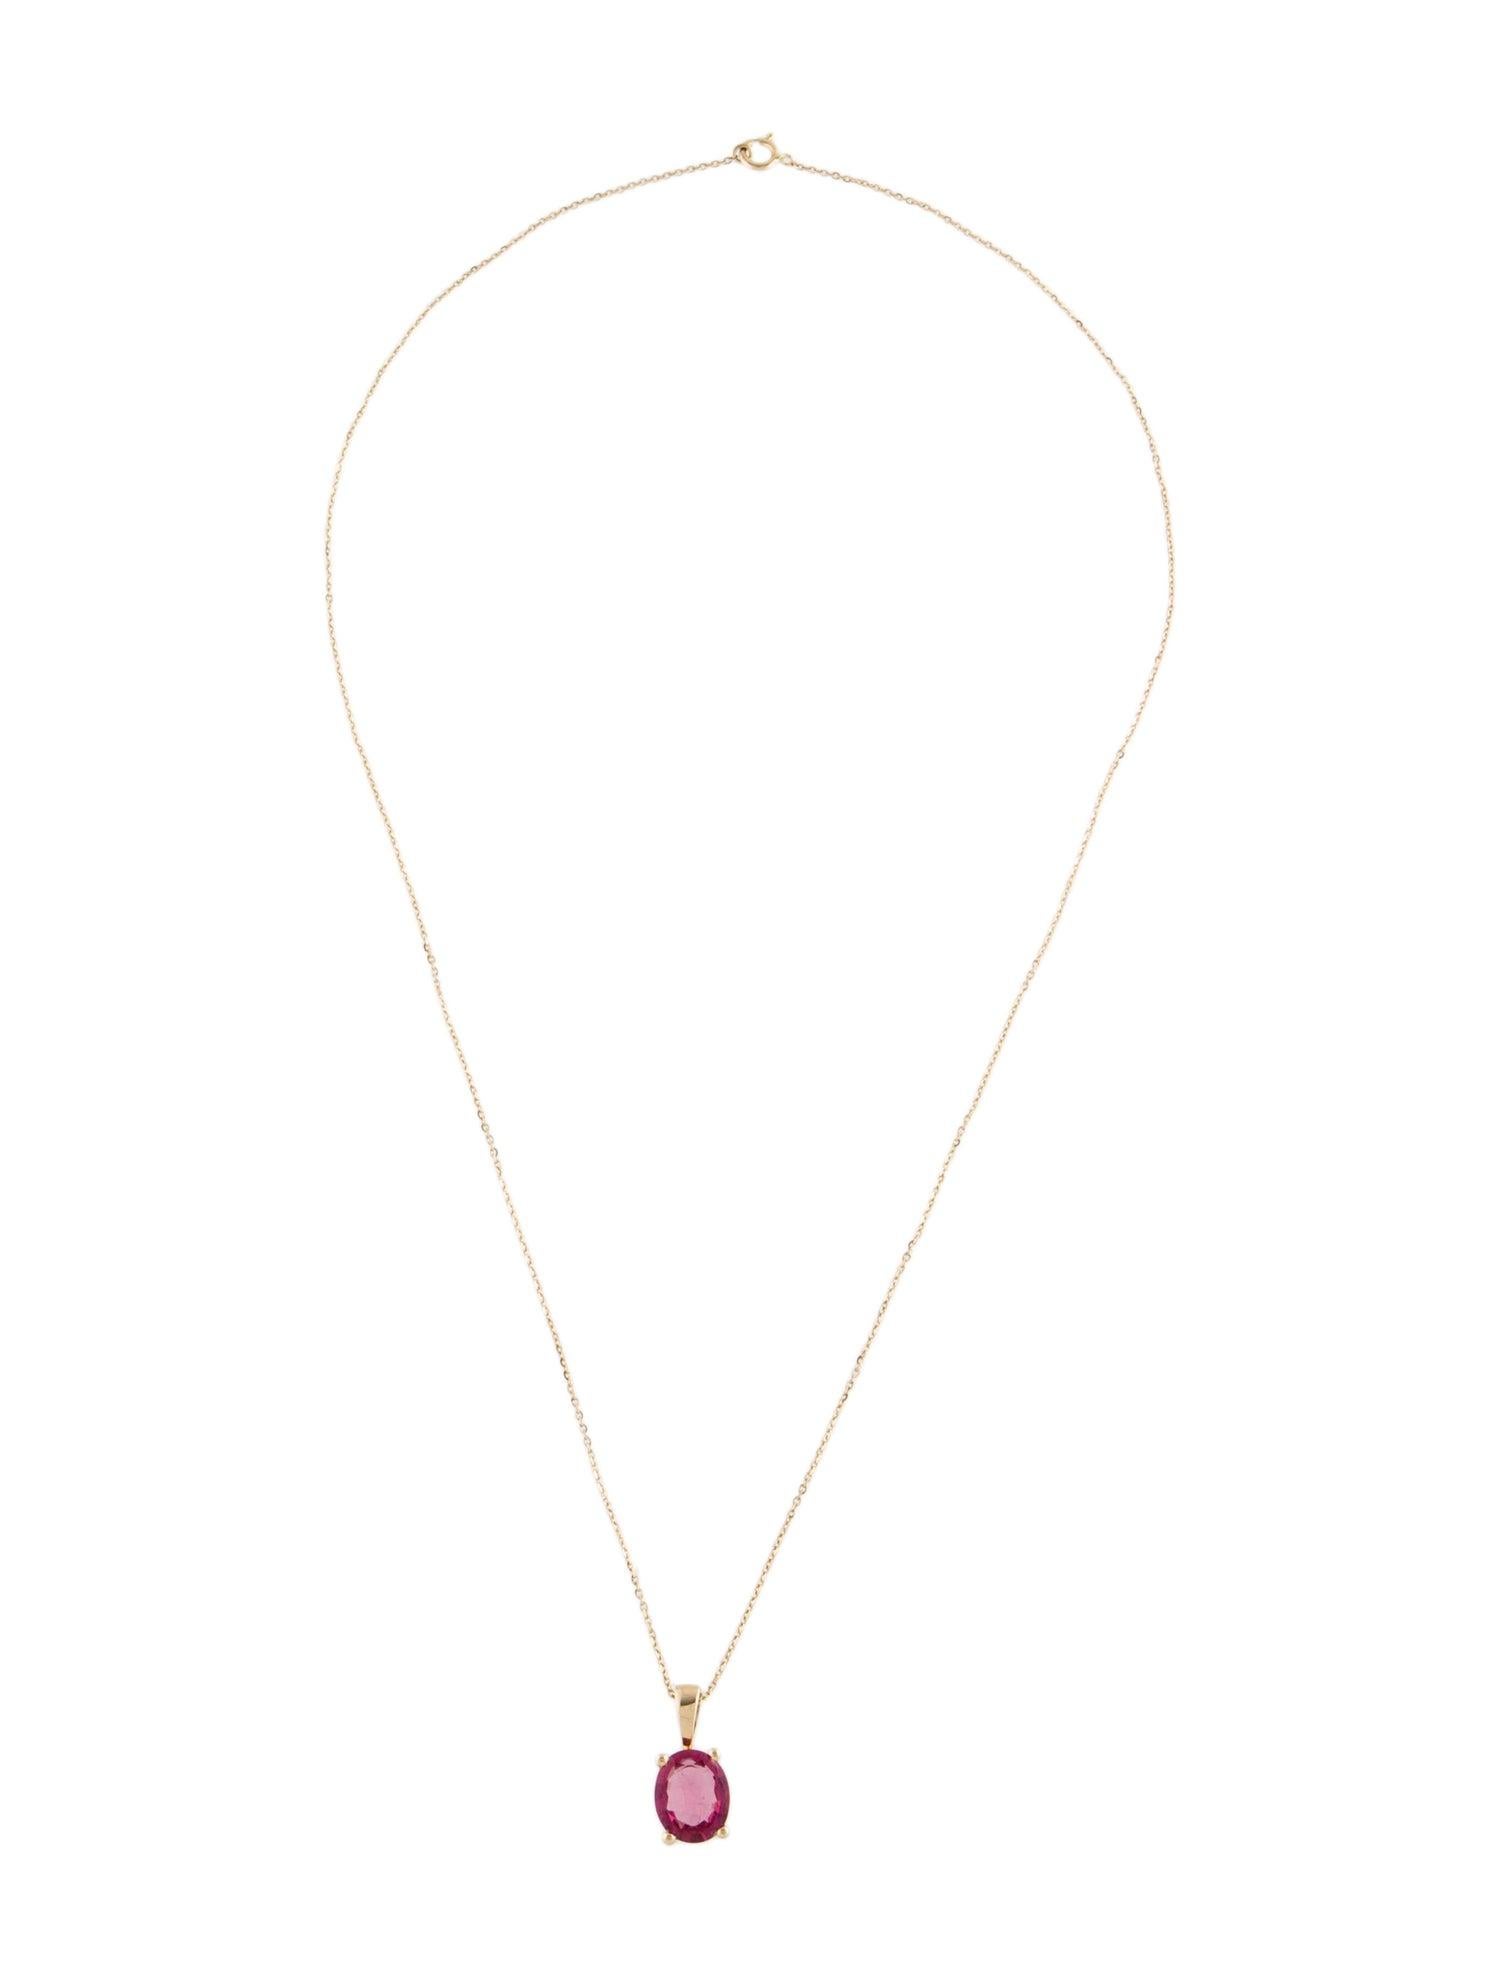 Women's or Men's Luxury 14K Tourmaline Pendant Necklace - Stunning Gemstone Statement Jewelry